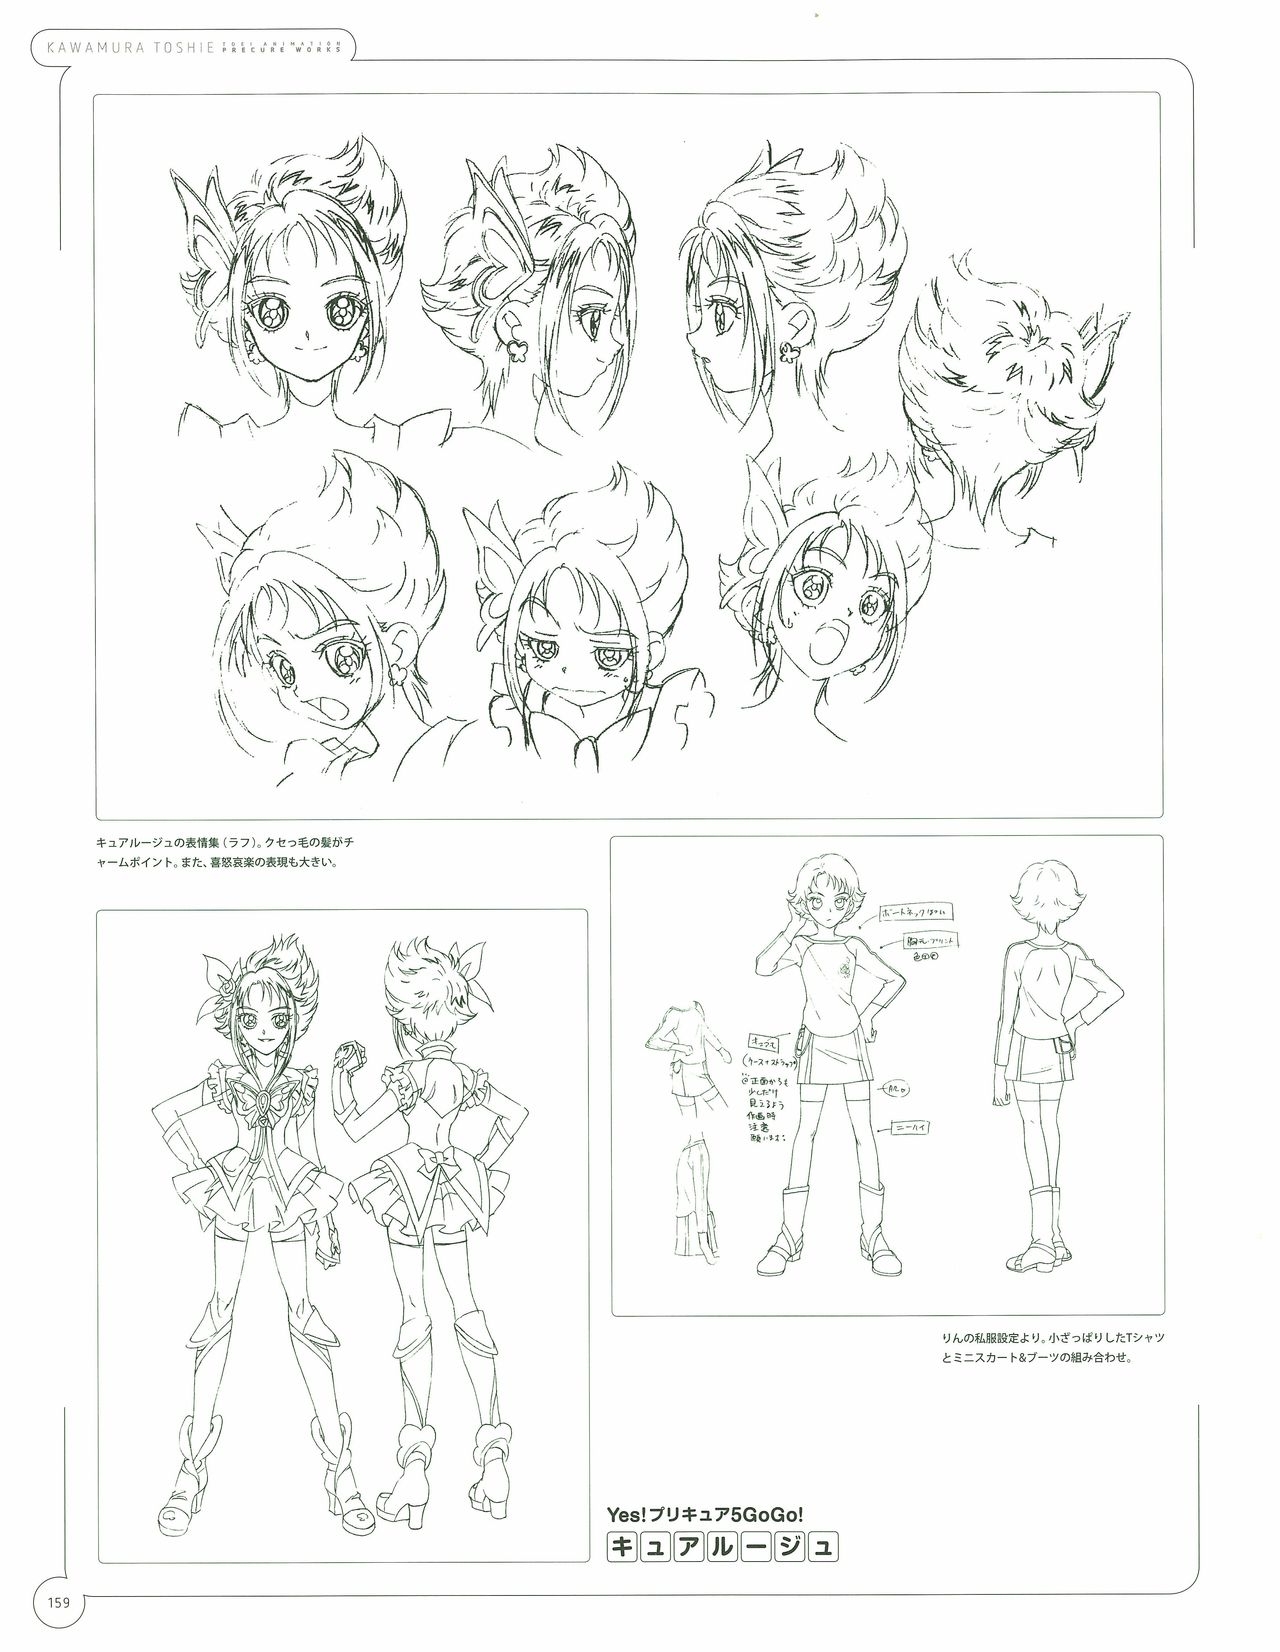 Kawamura Toshie - Toei Animation Precure Works 159